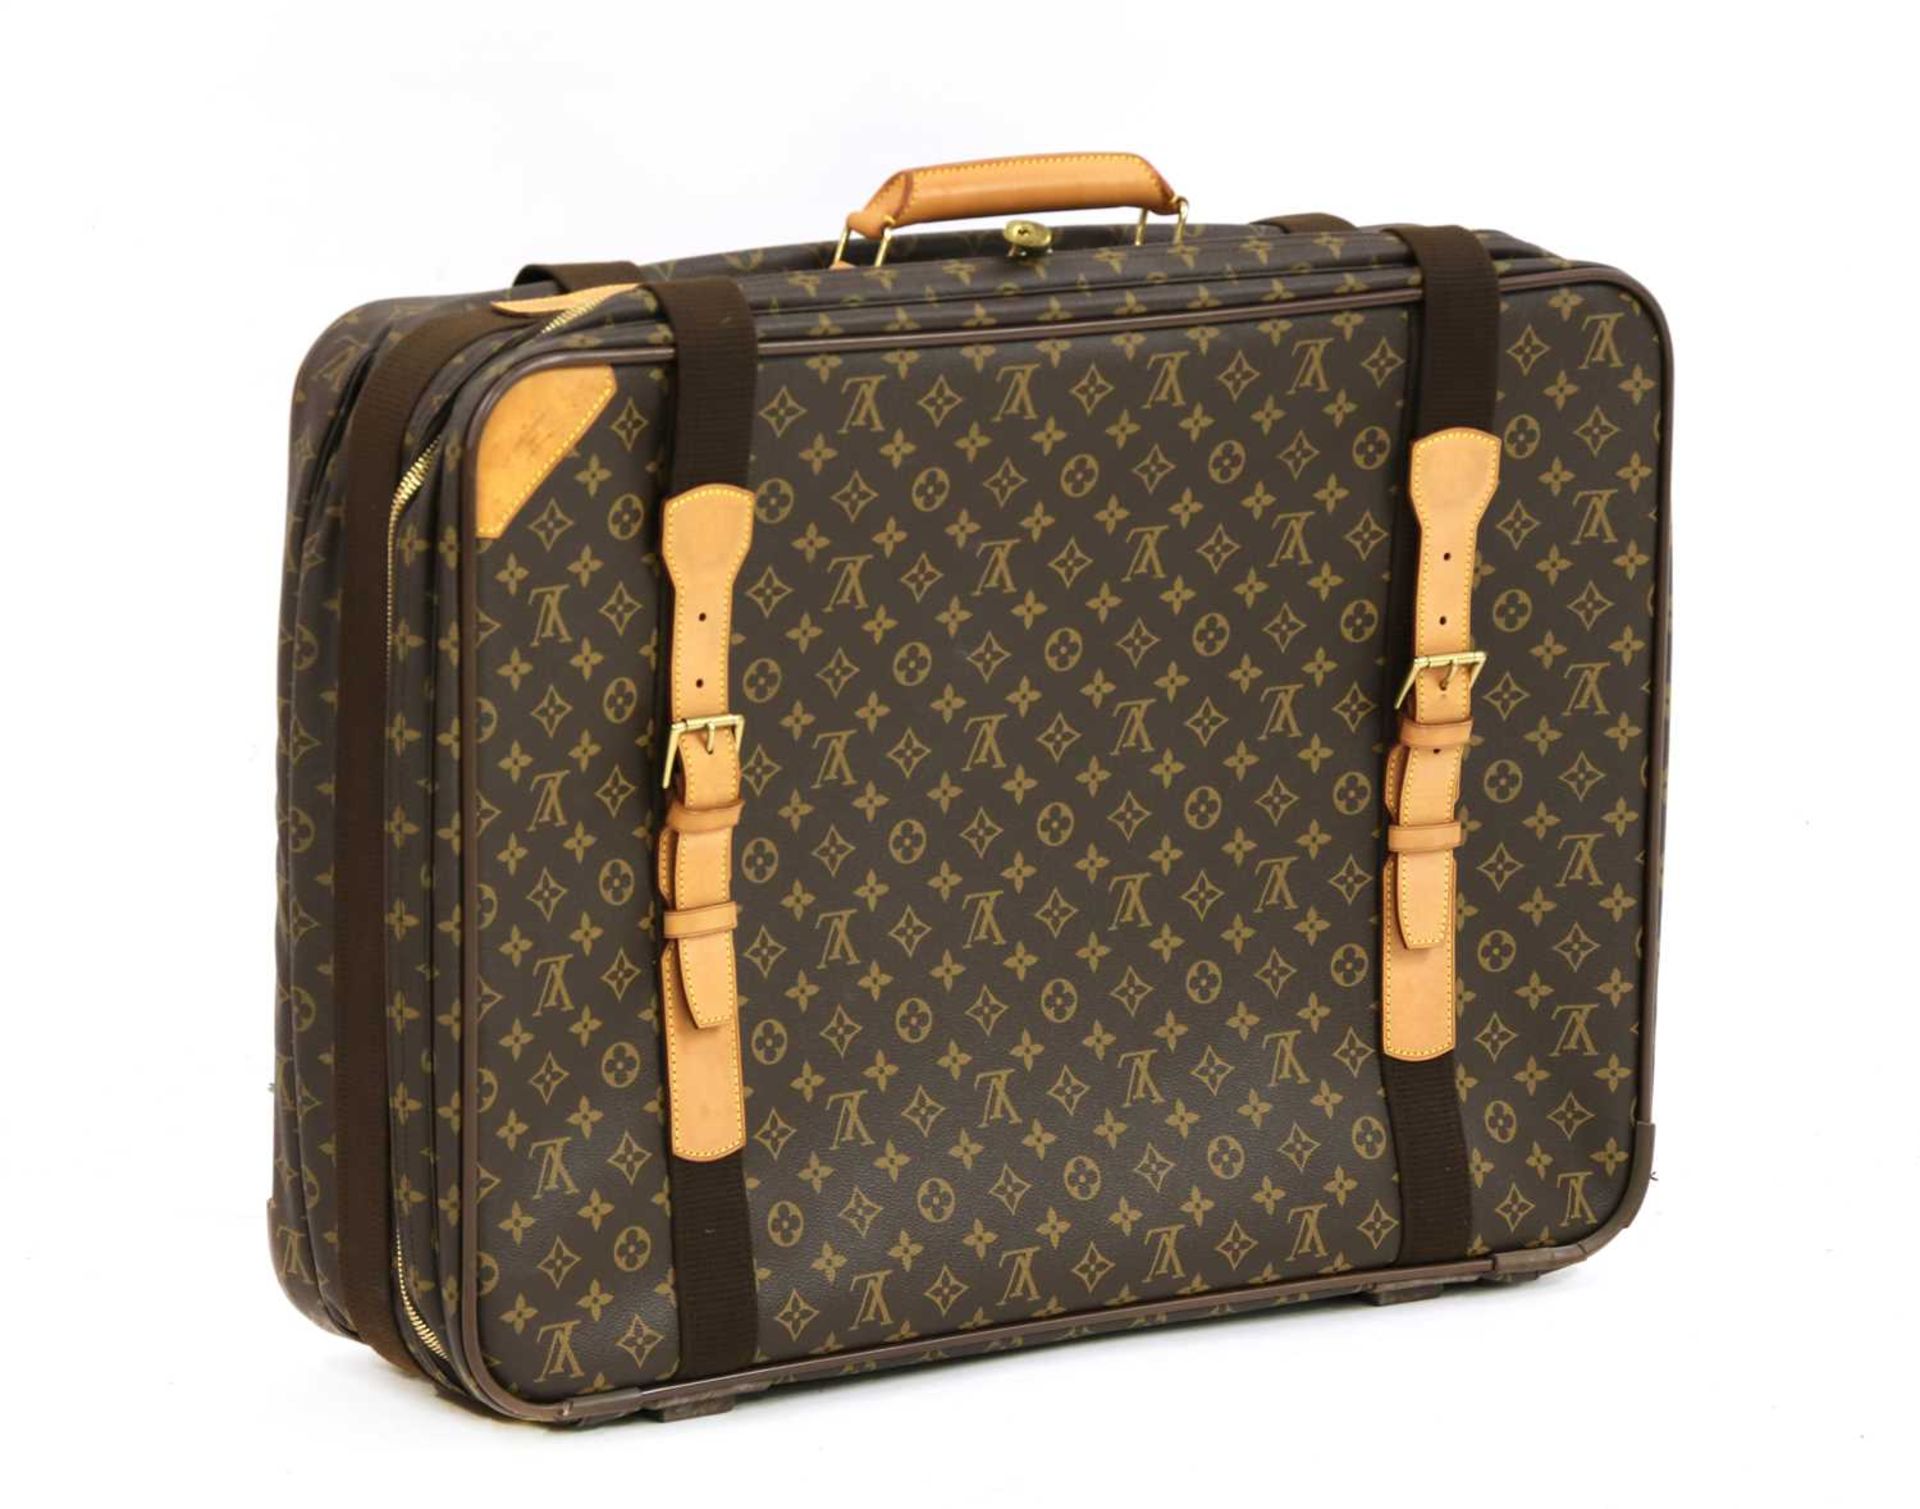 A Louis Vuitton 'Sirius 65' monogrammed canvas suitcase,